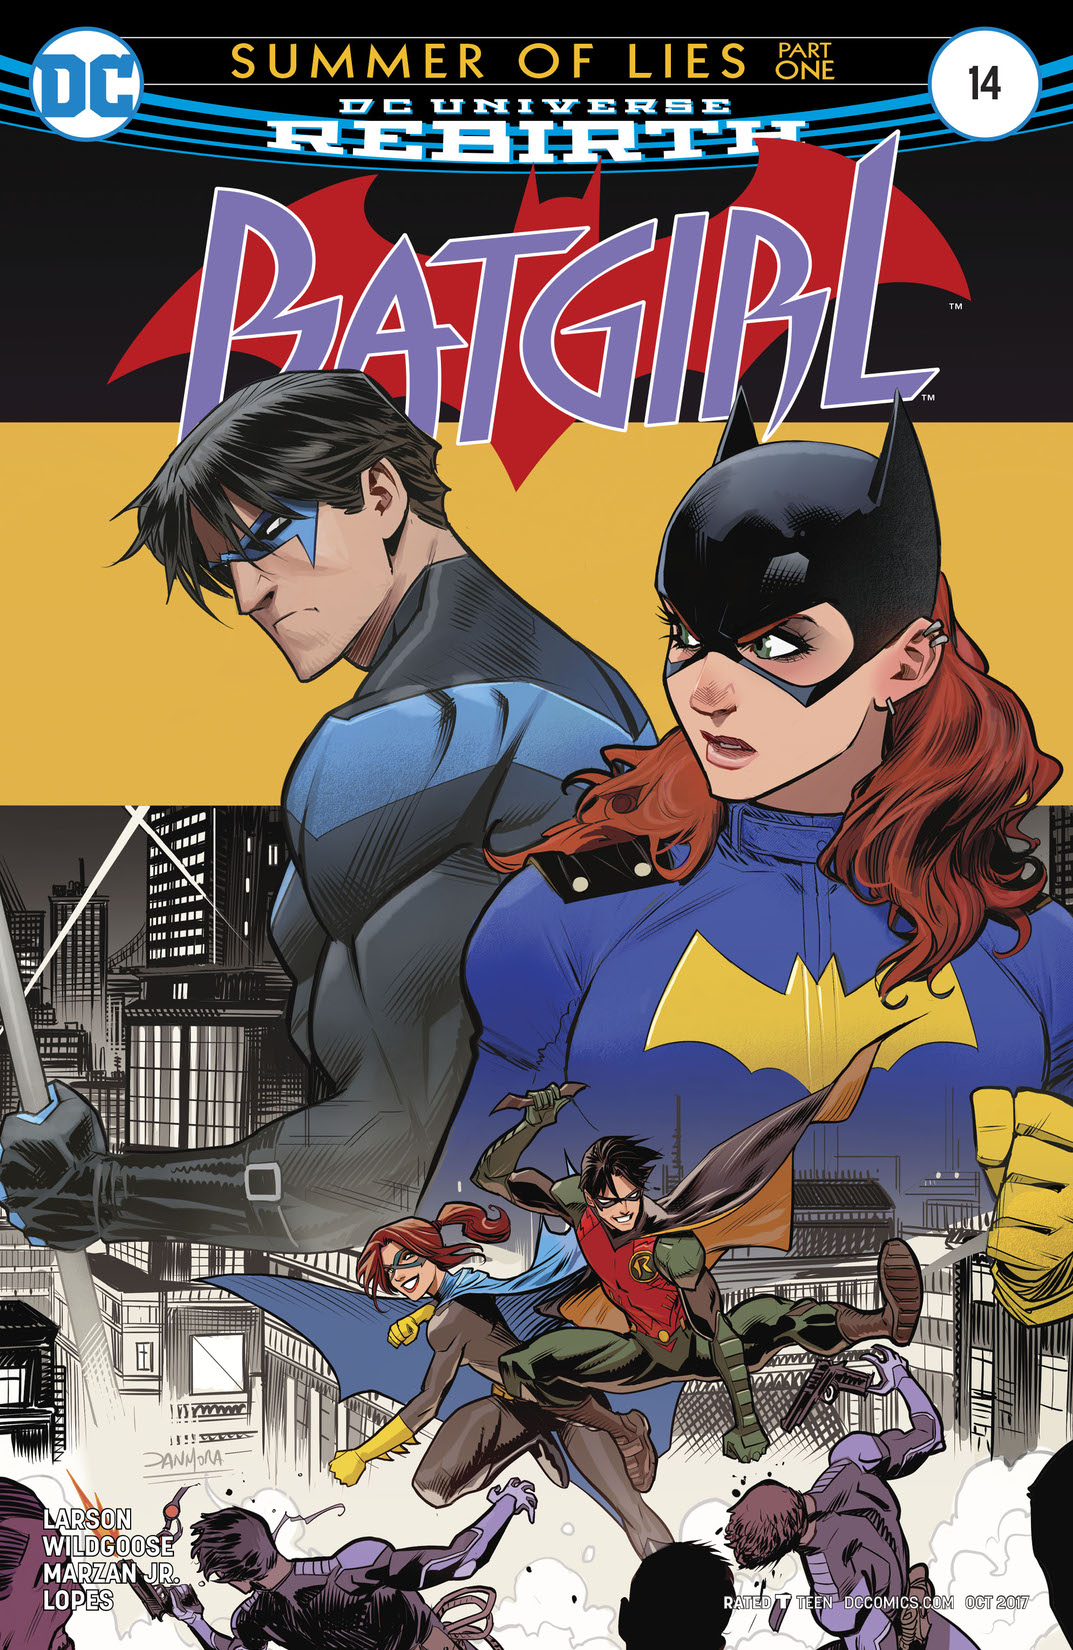 Batgirl (2016-) #14 preview images